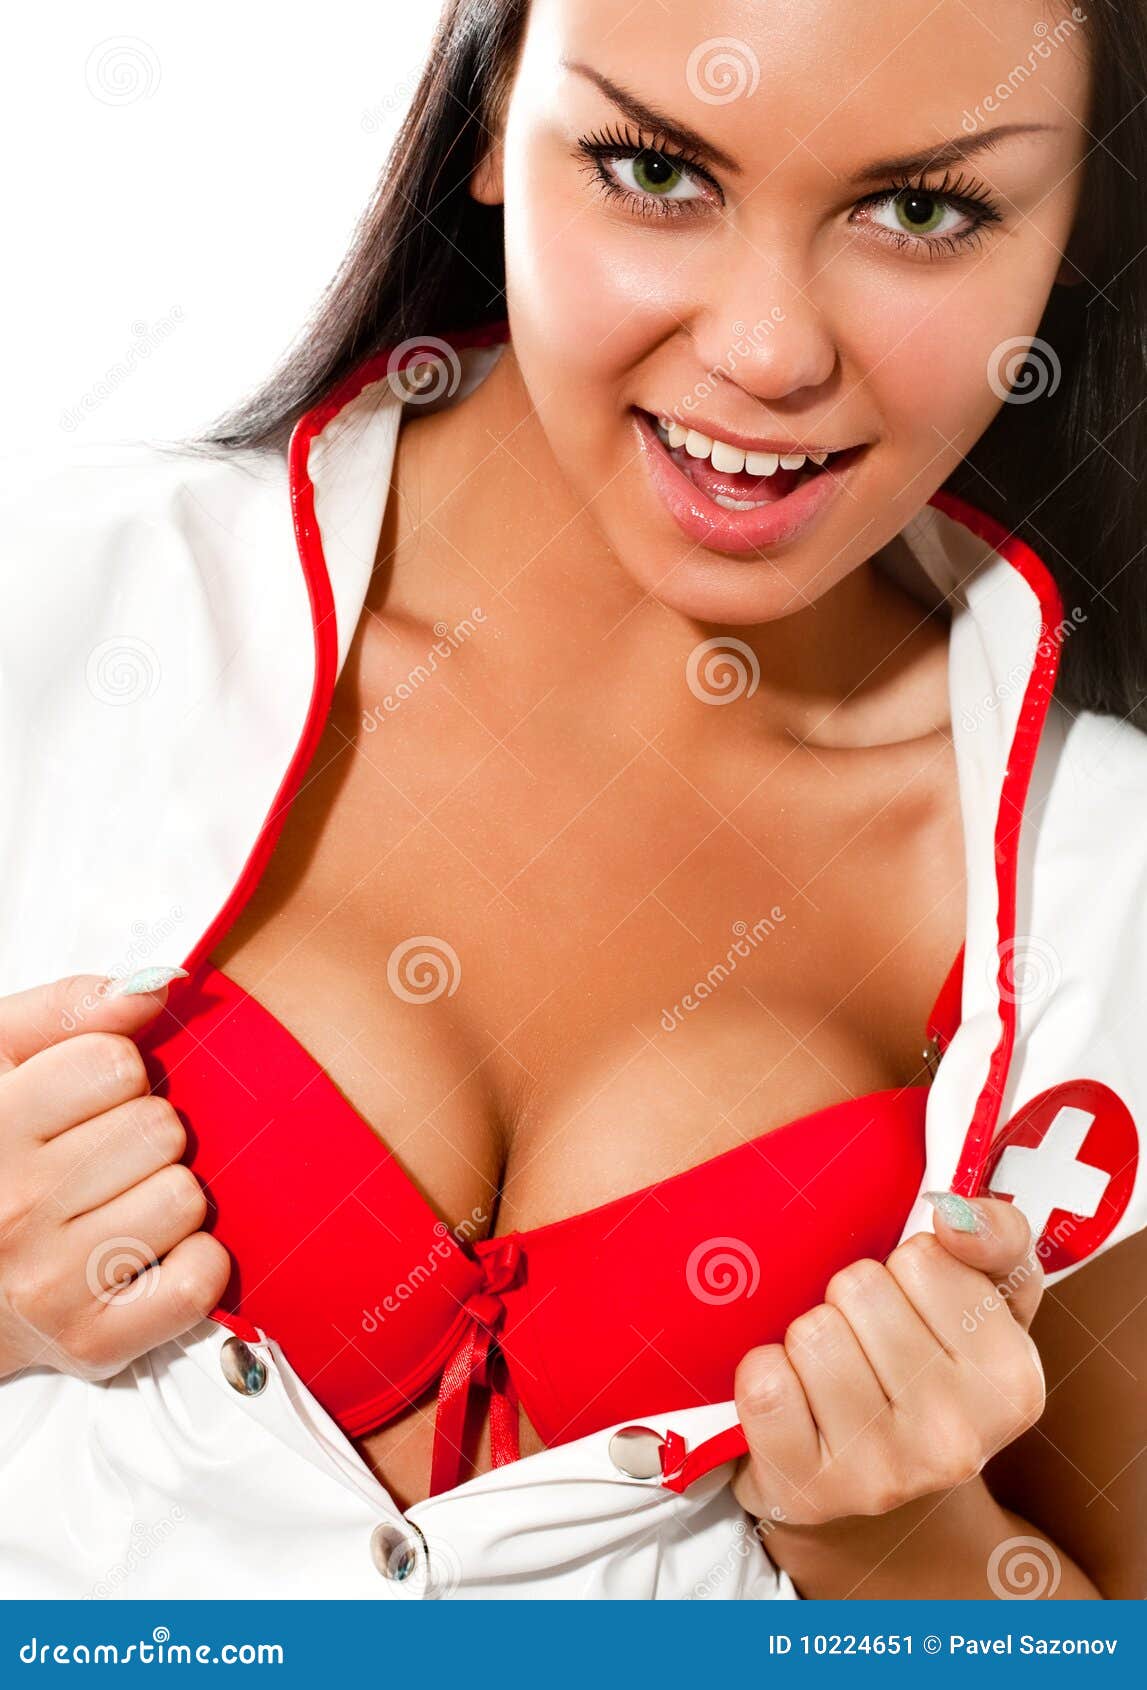 Sexy Women Nurses - Nurse stock image. Image of human, nude, isolated, hair - 10224651